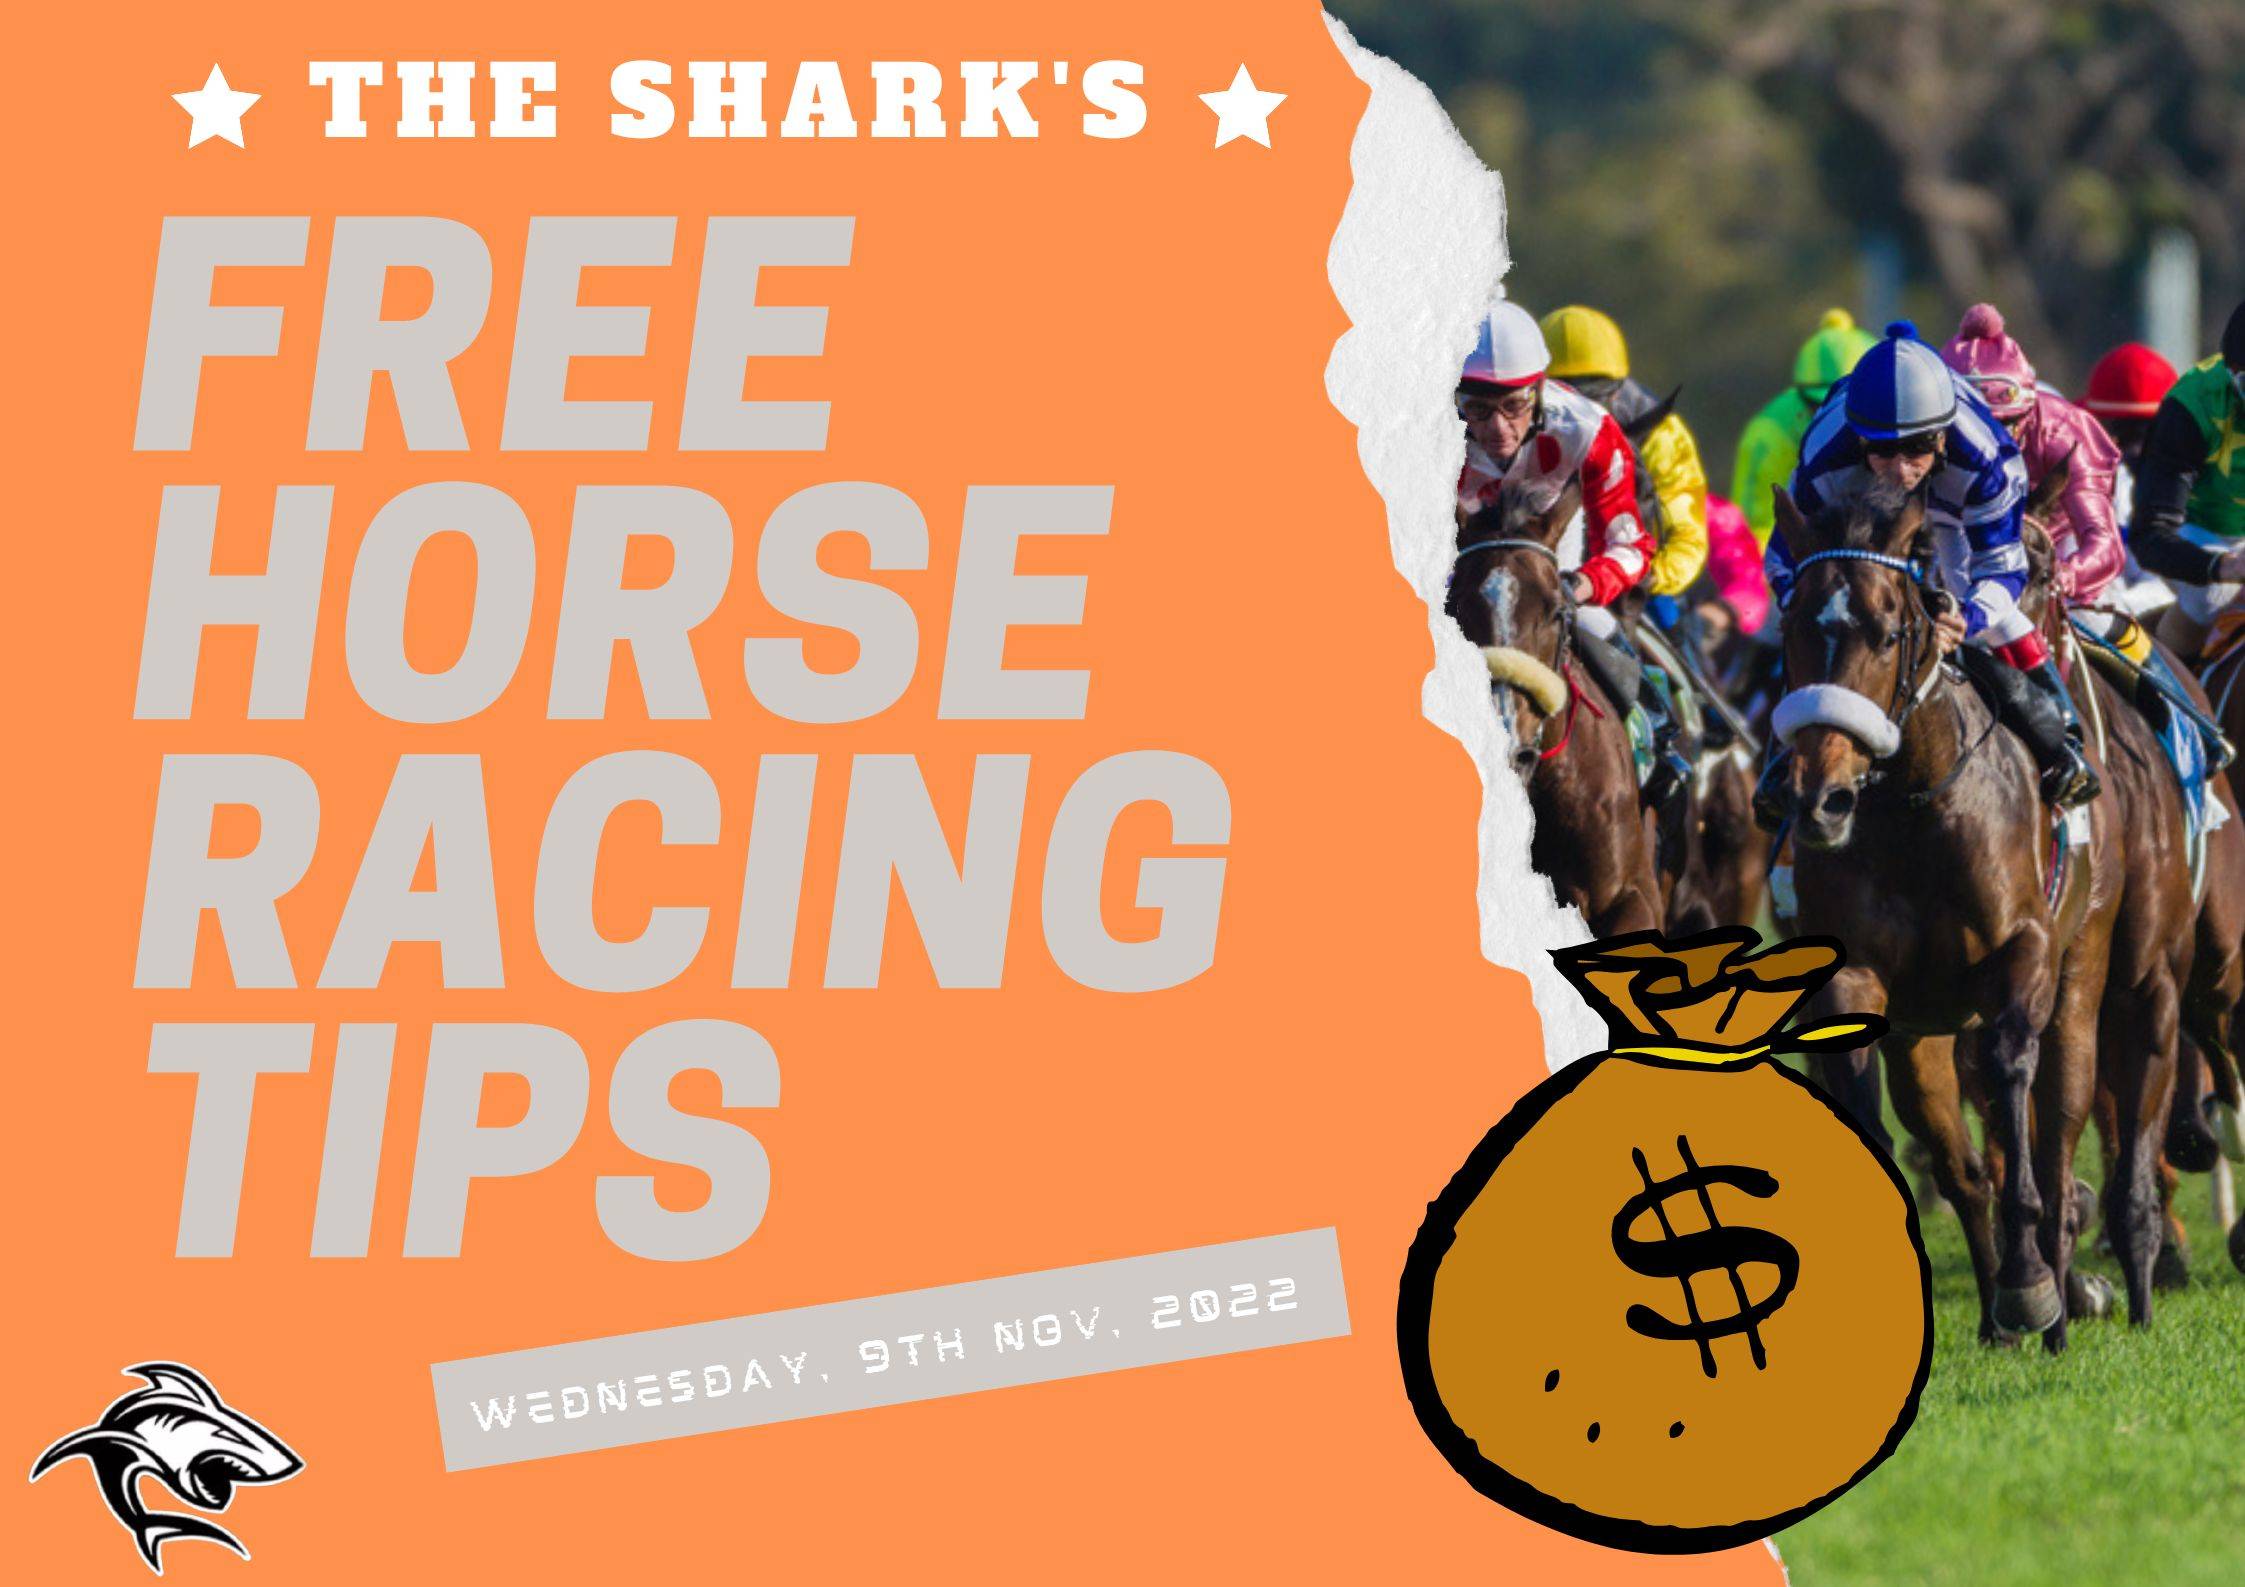 Free Horse Racing Tips - 9th Nov